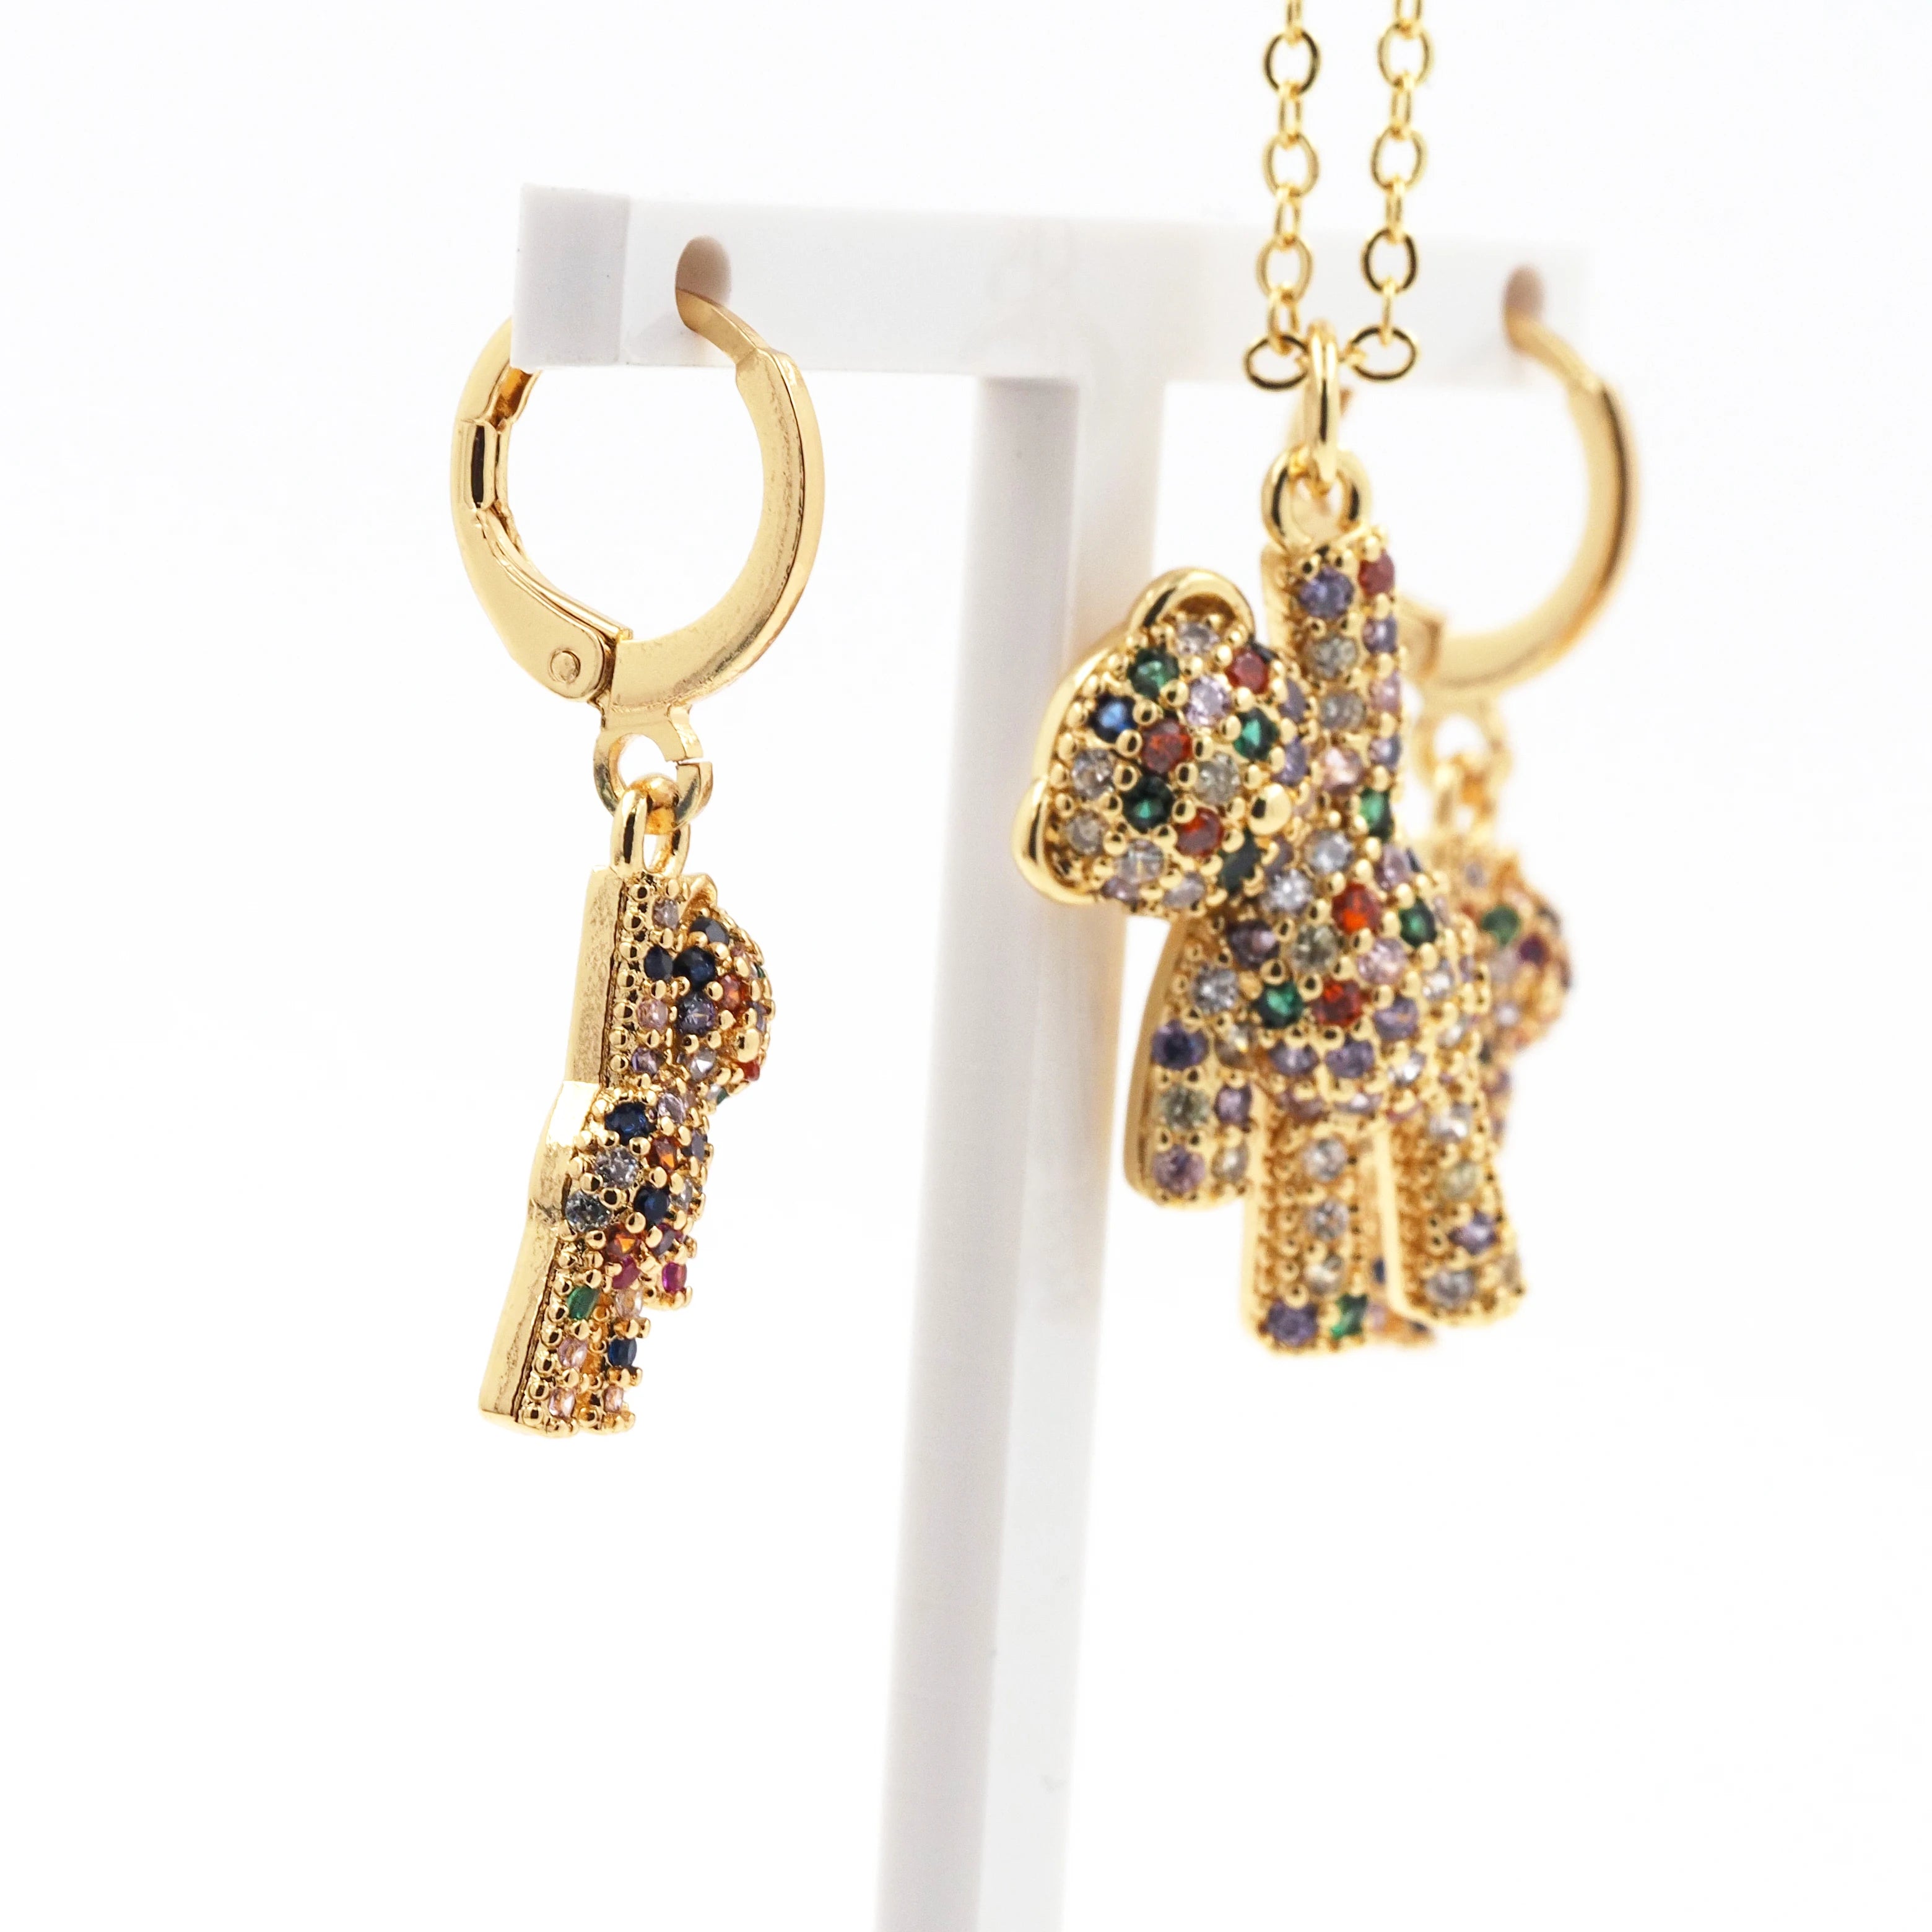 Dazzling Girls, Teens' Multi-Coloured Crystal Bear Jewelry Set. Perfect Birthday Gift!